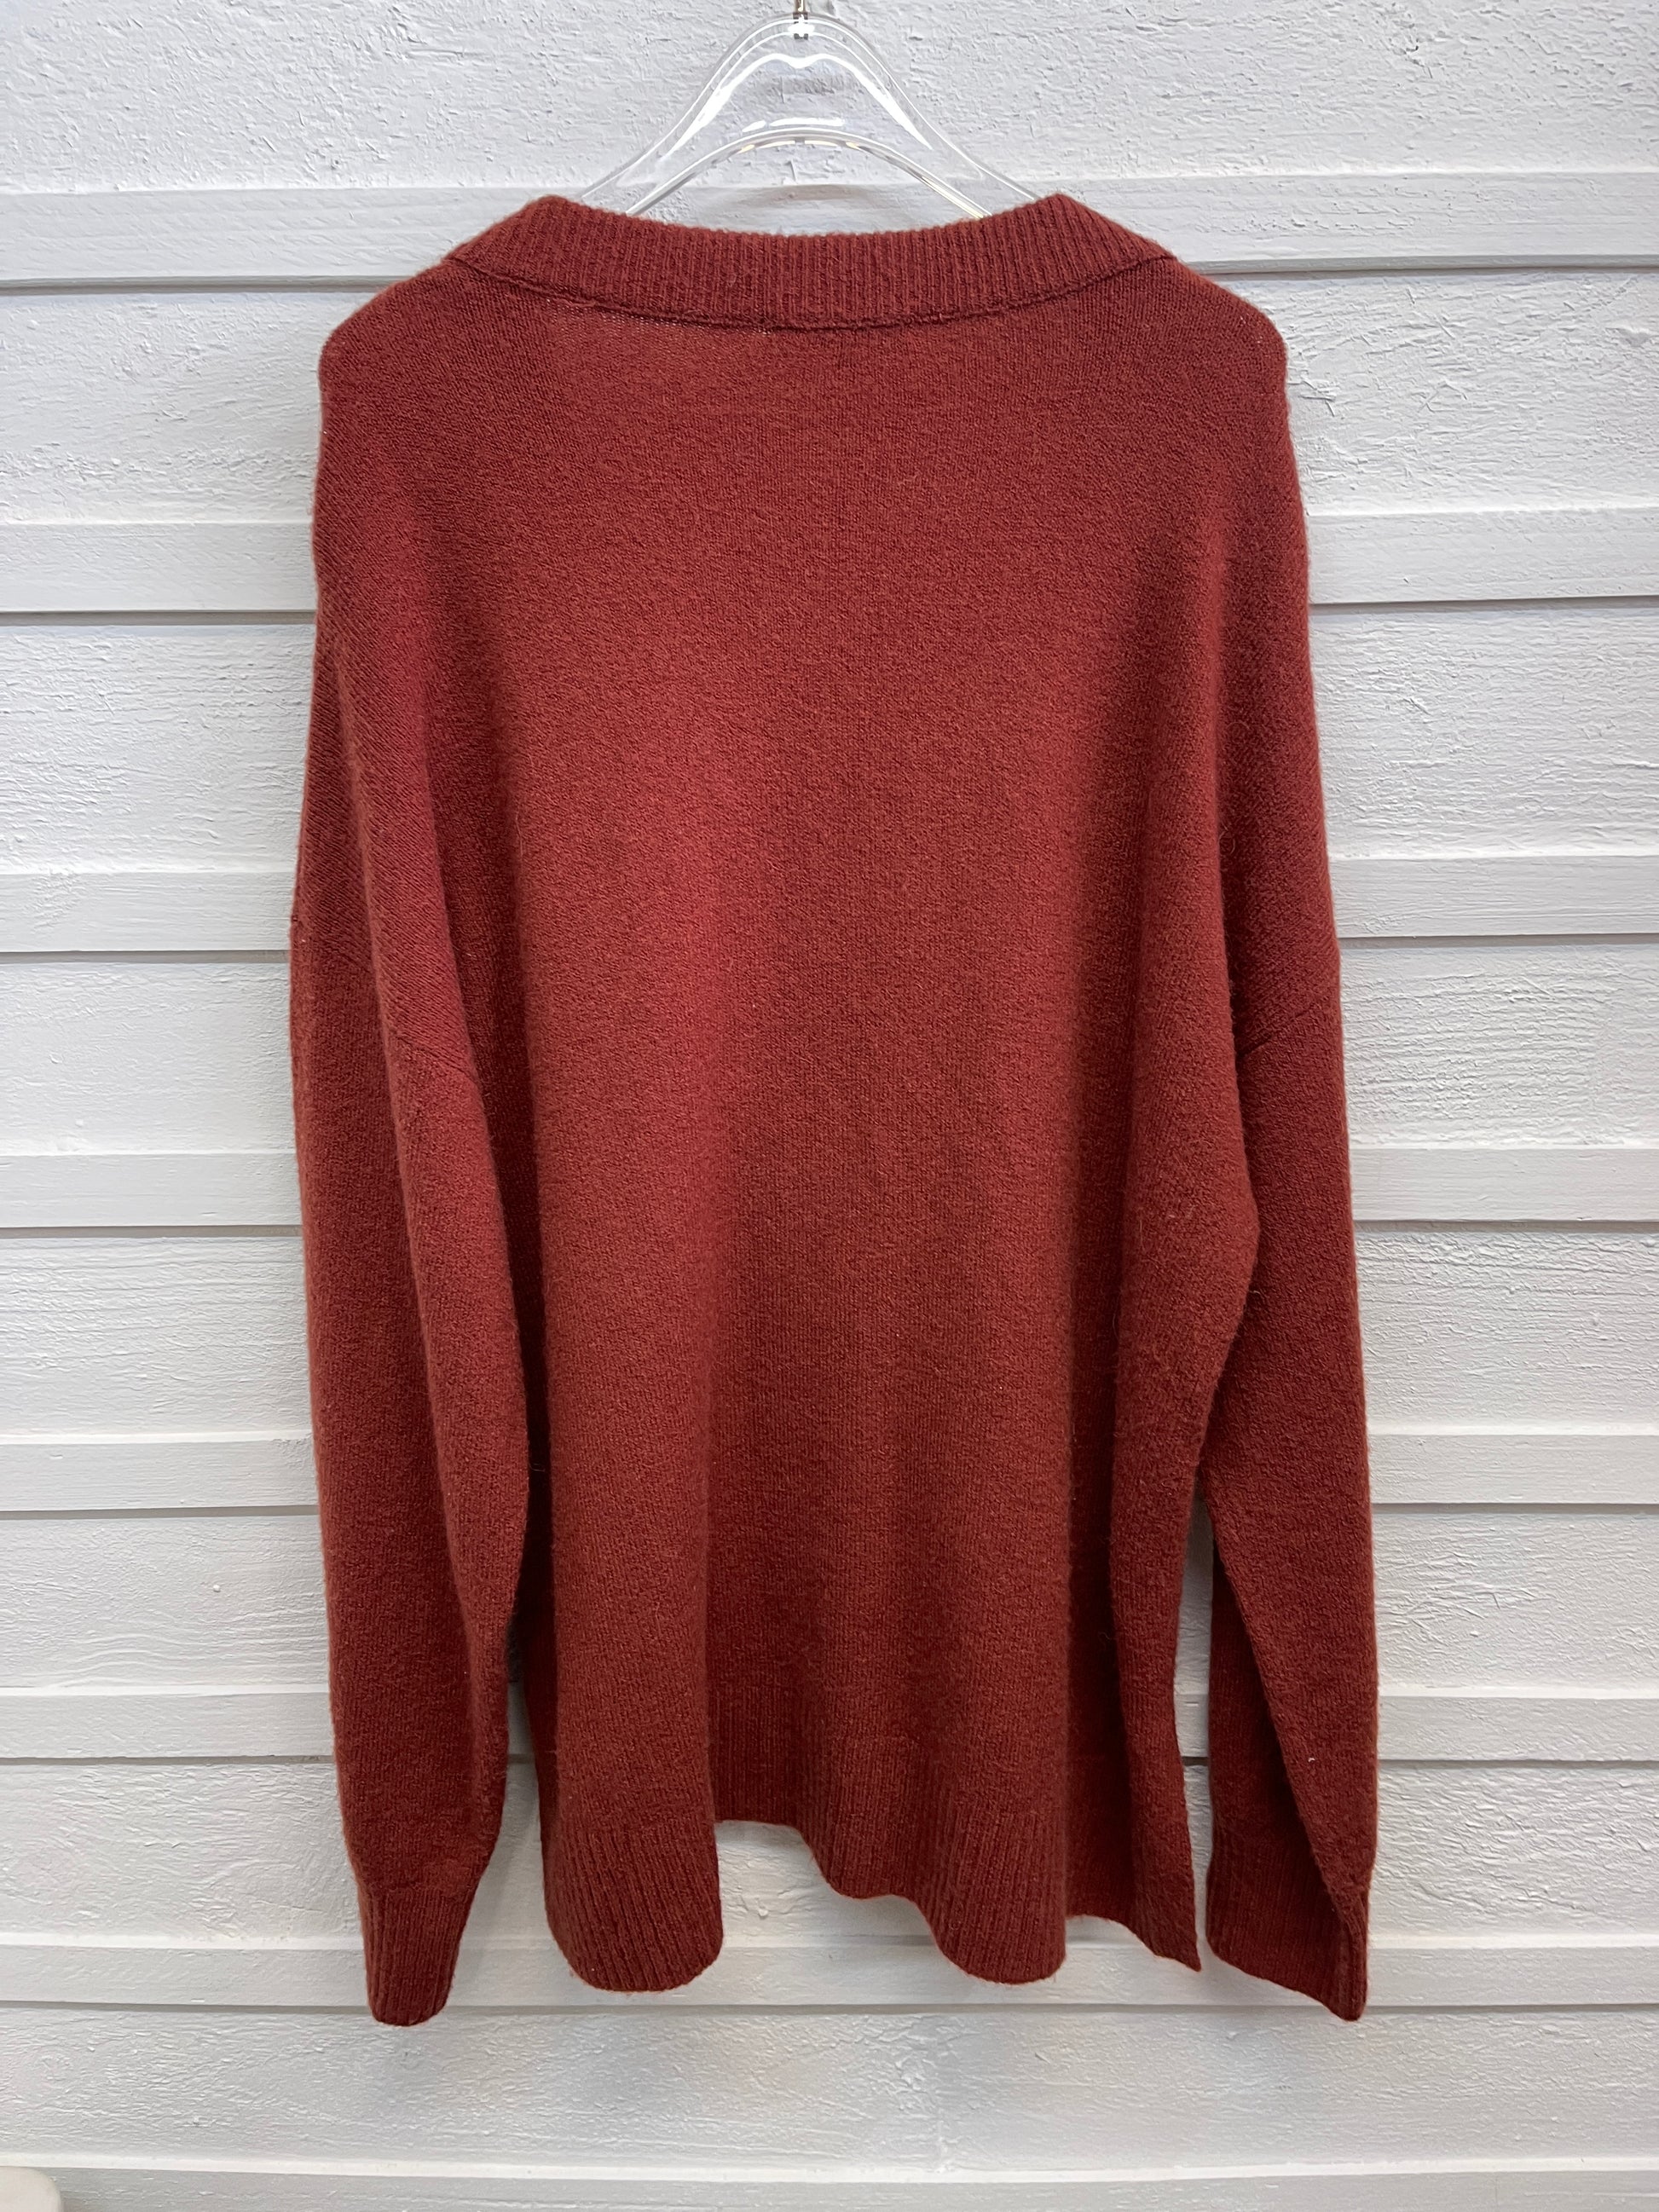 Madewell Wool Blend Rust Sweater